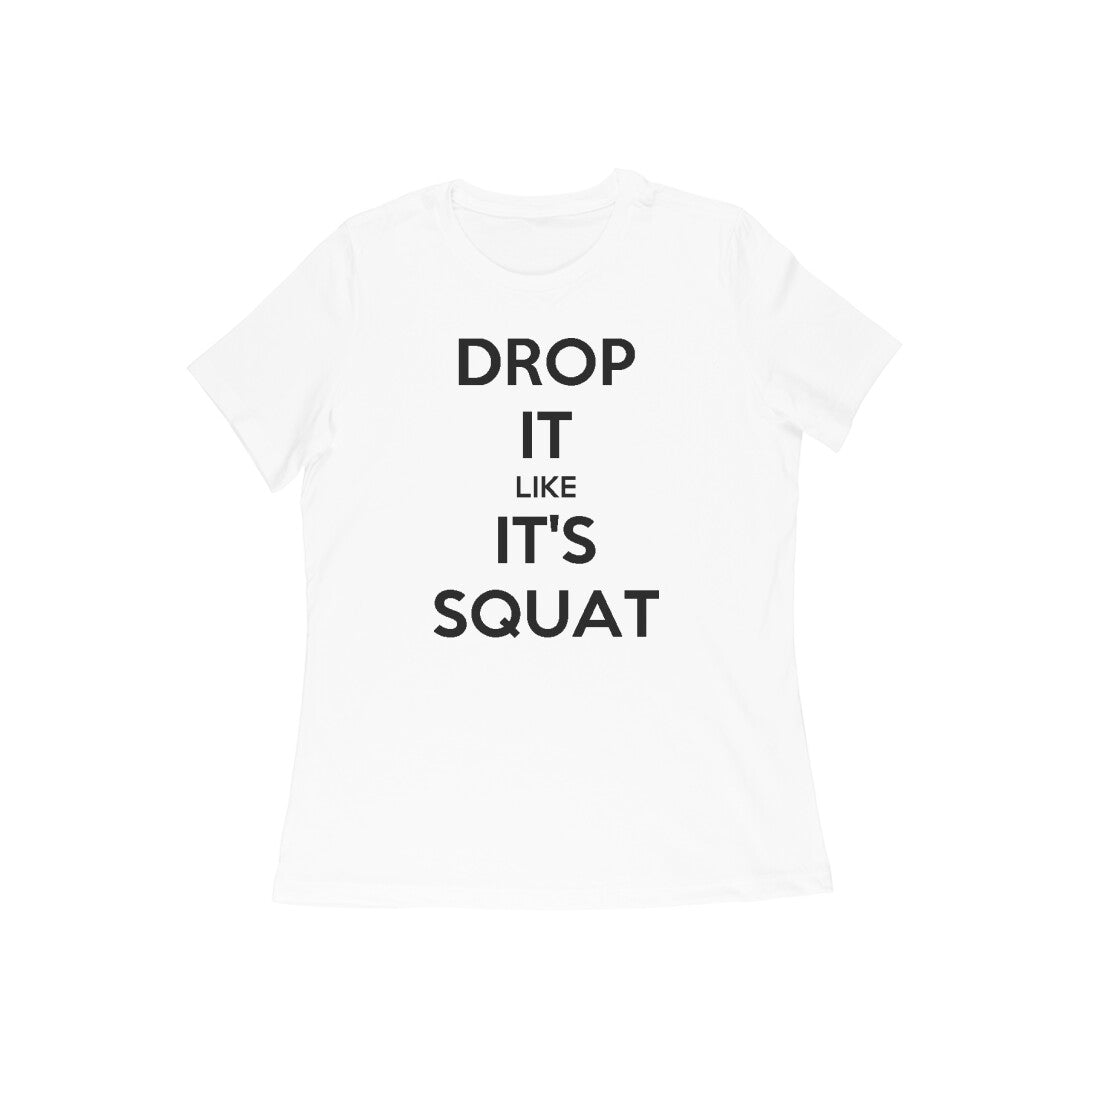 Drop it like it’s squat Workout T-shirt.